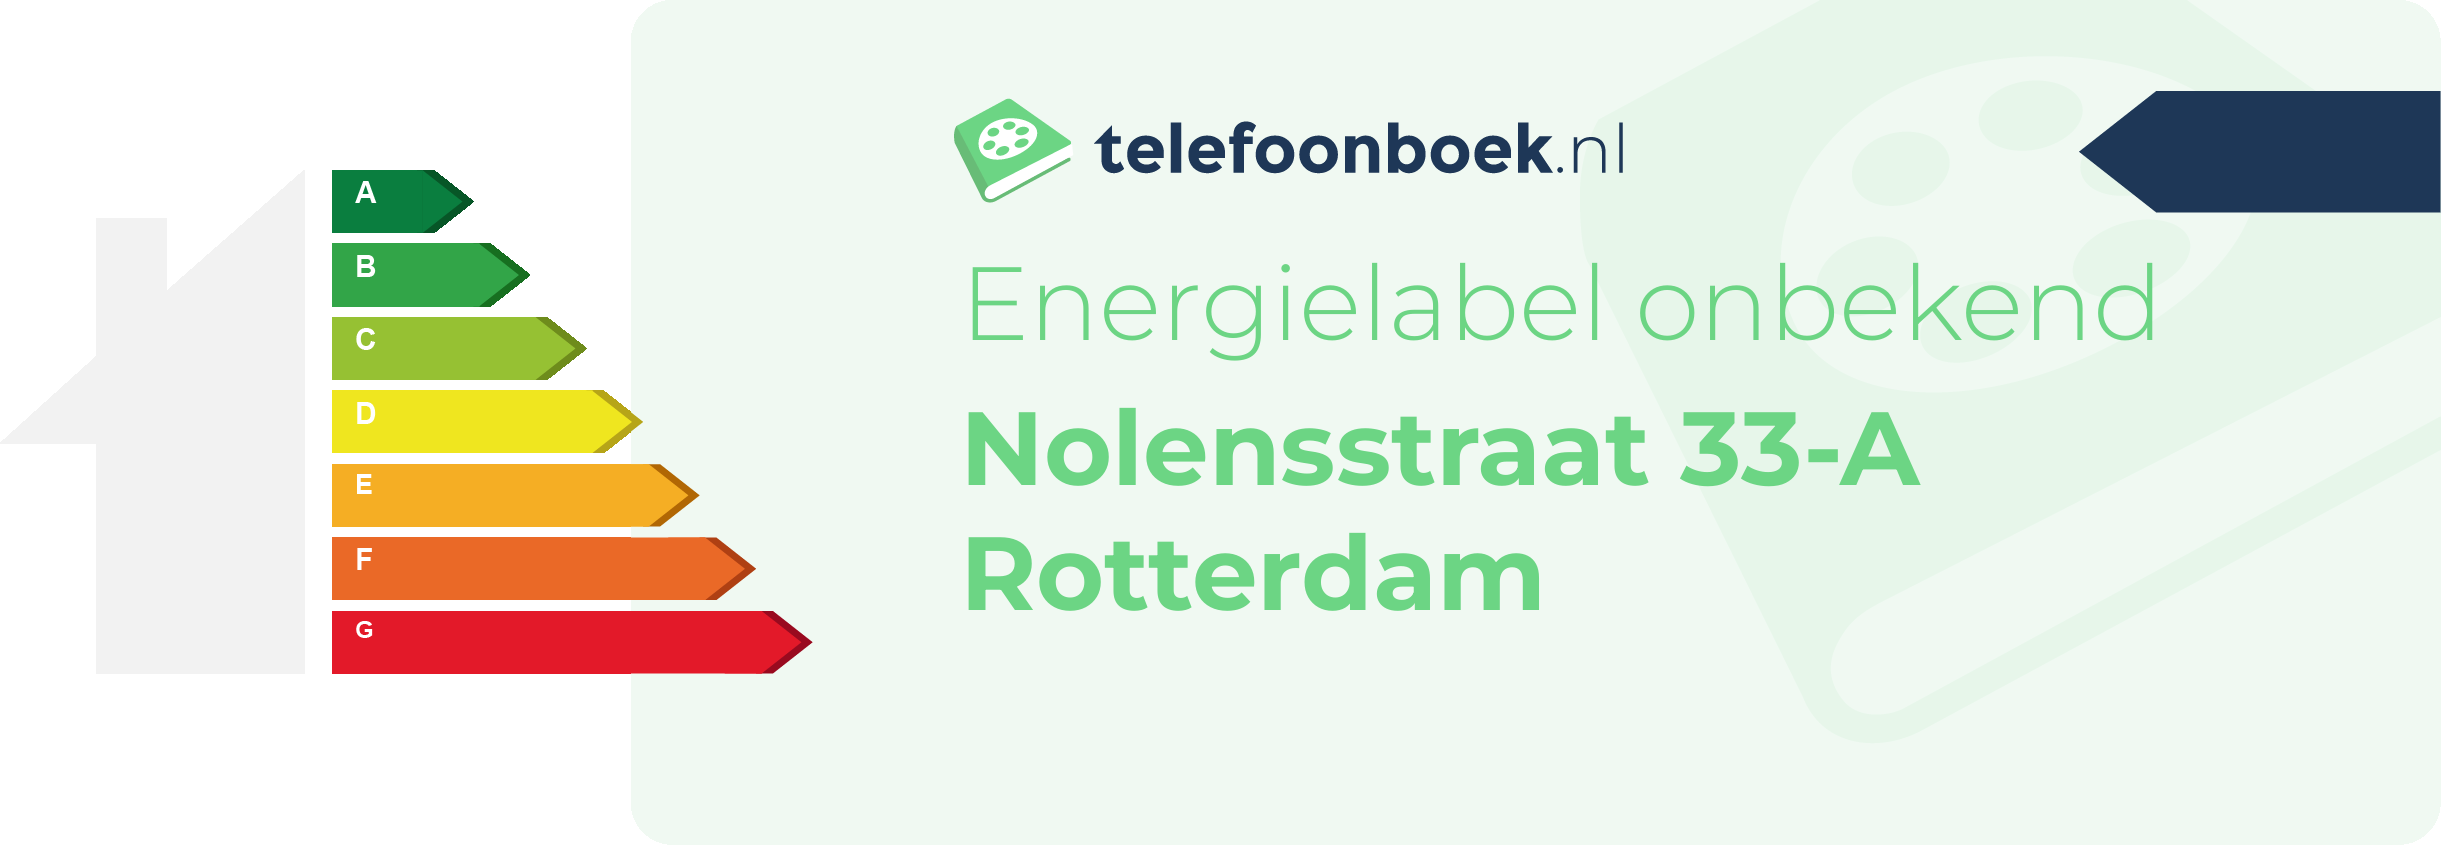 Energielabel Nolensstraat 33-A Rotterdam